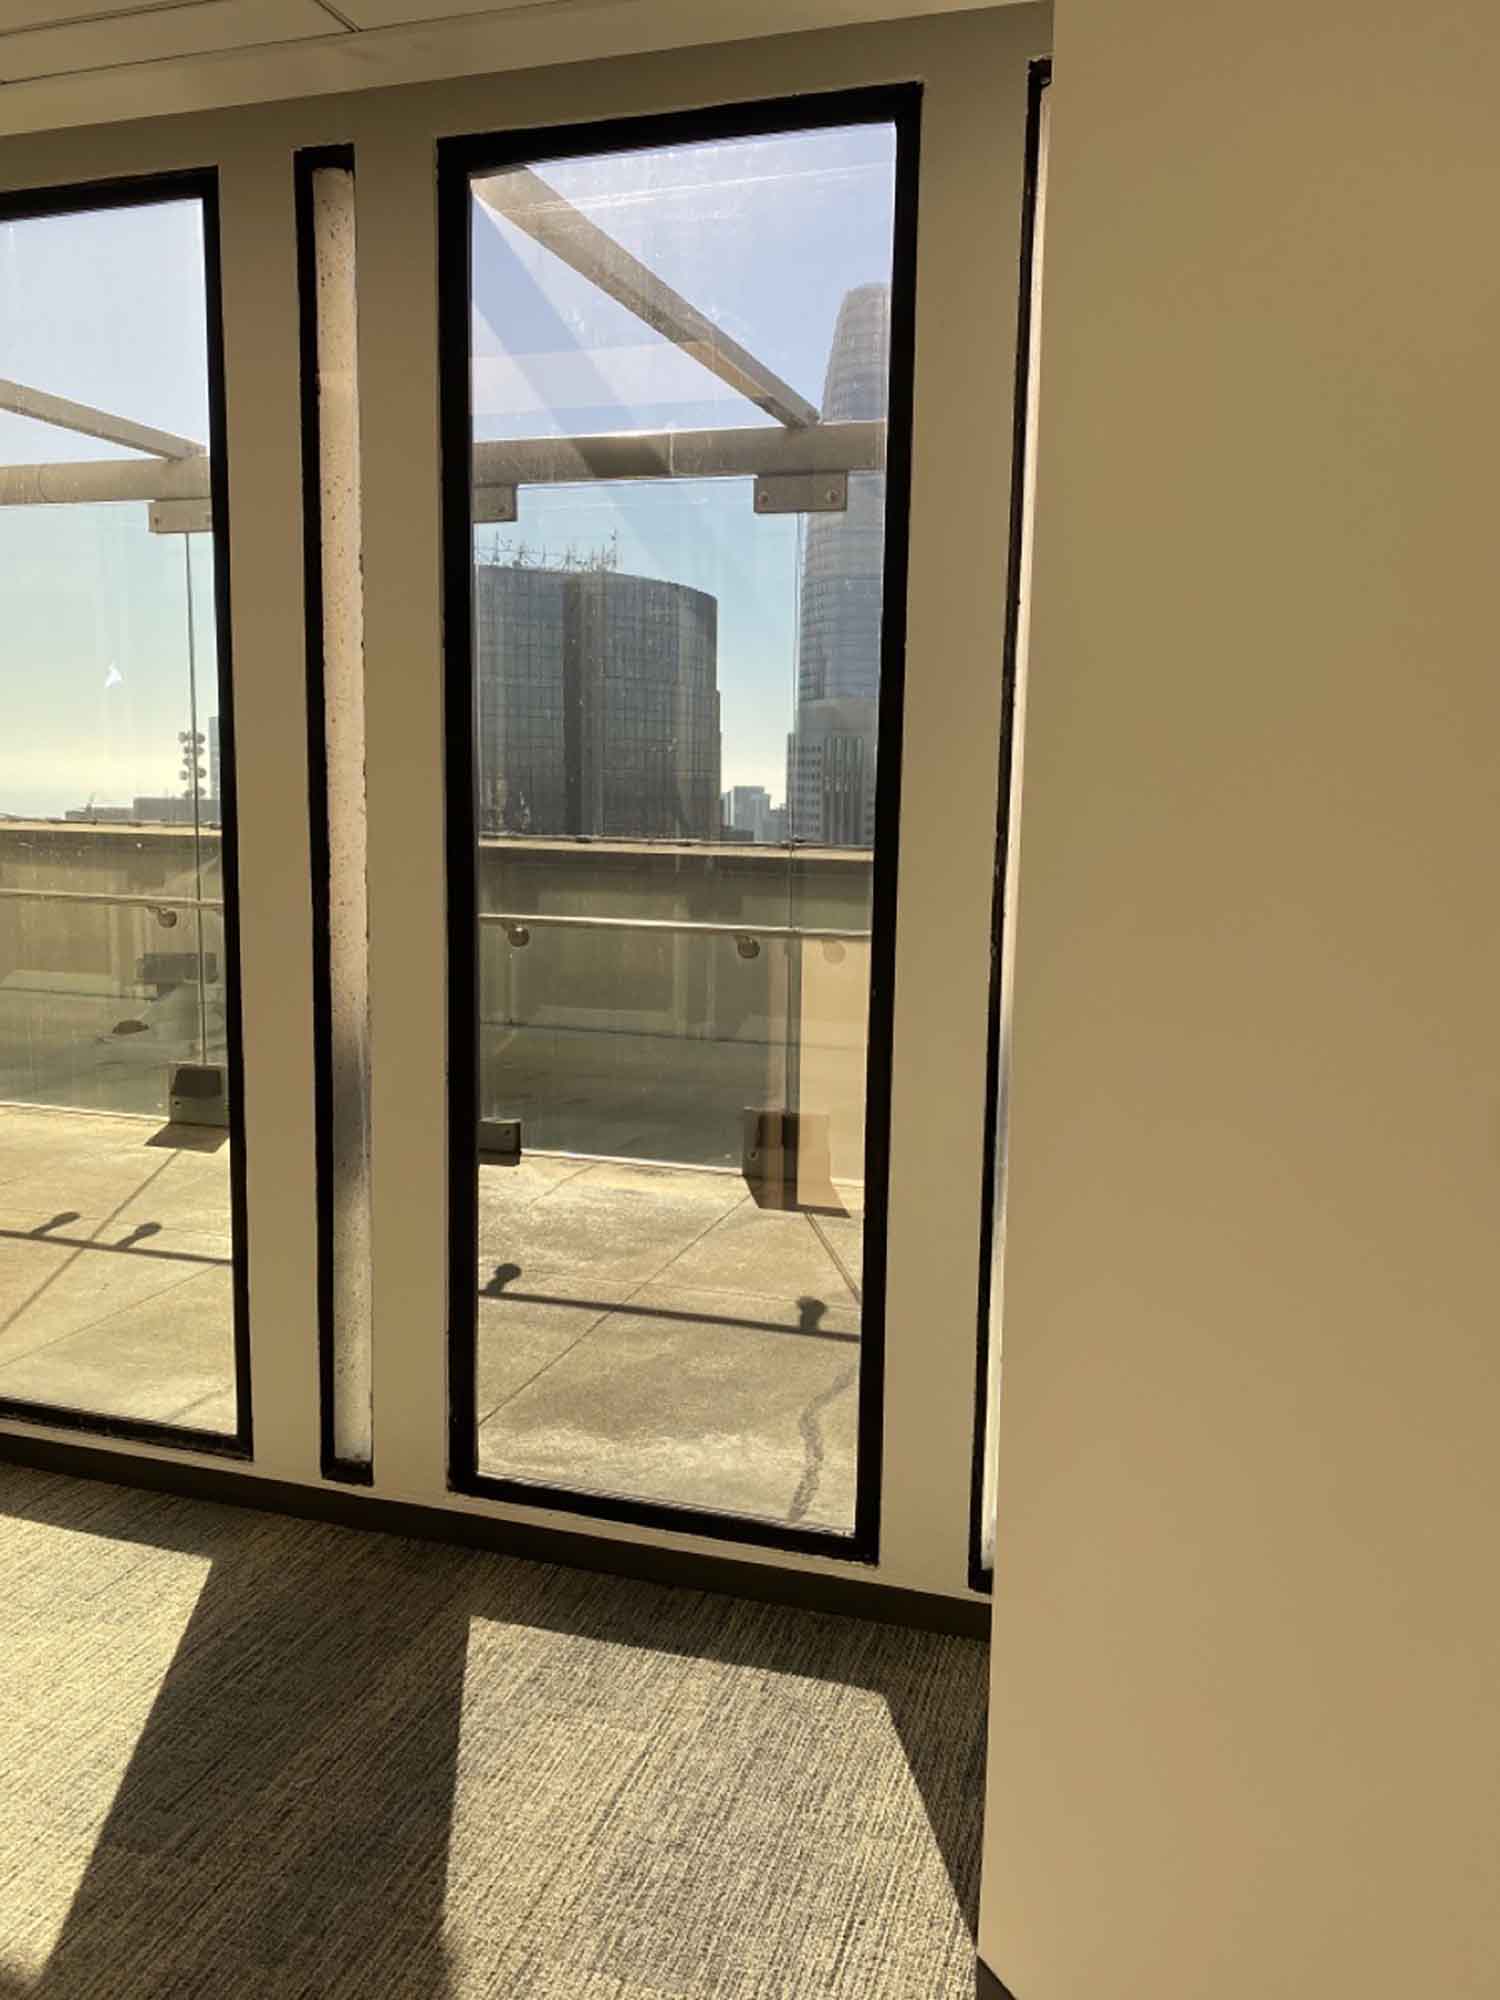 ClimatePro Installs 3M Sun Control Window Film In  A San Francisco Office